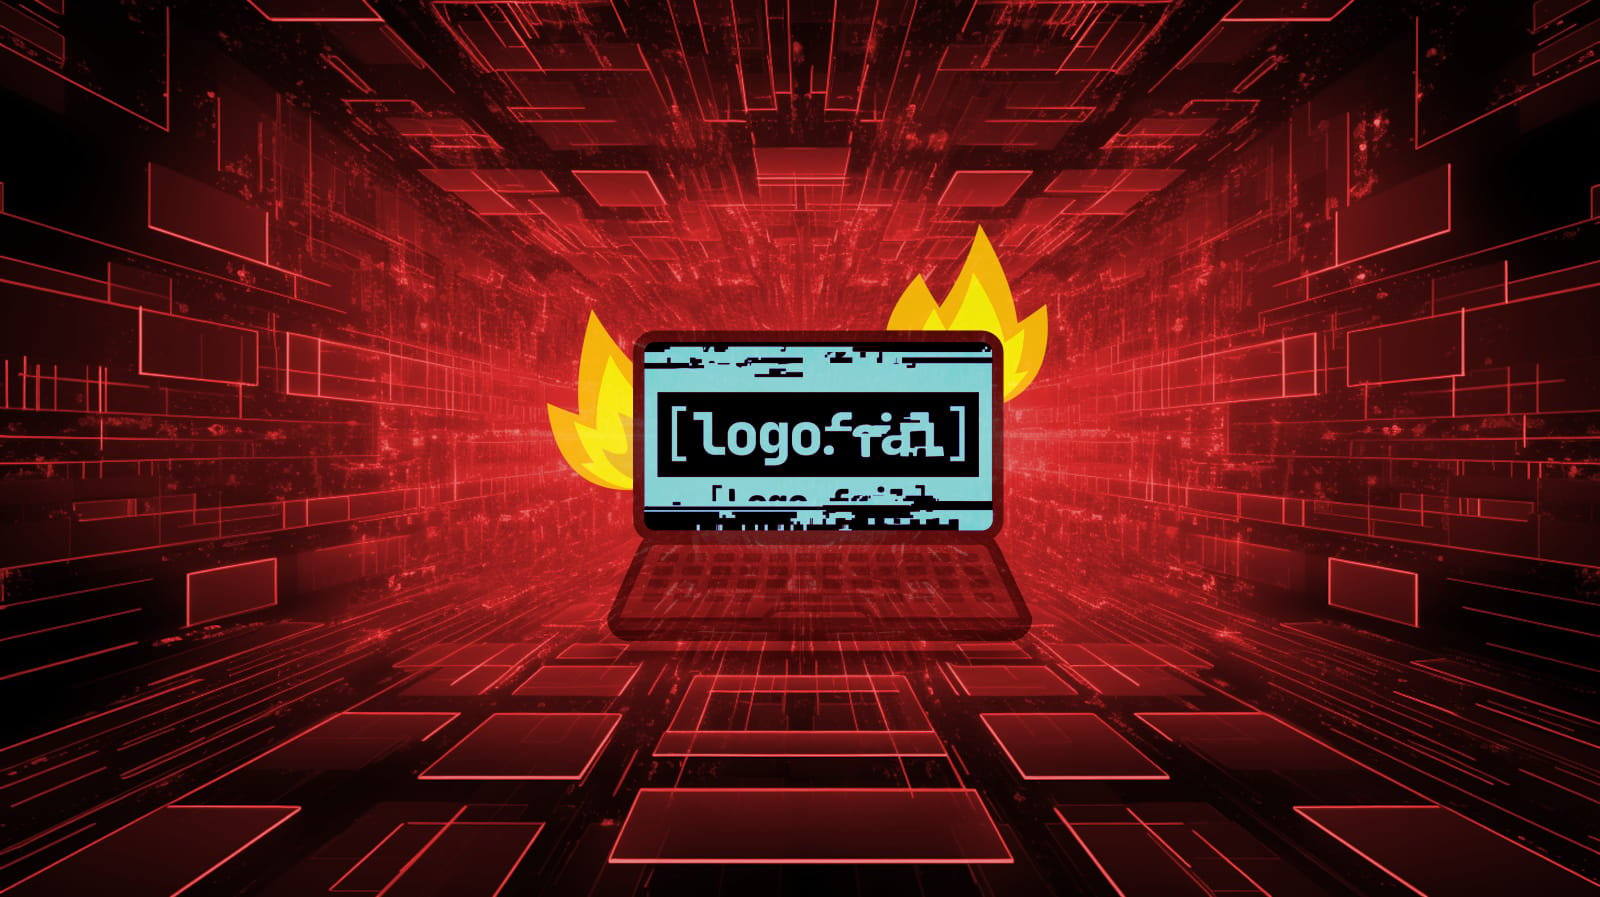 LogoFAIL attack can install UEFI bootkits through bootup logos